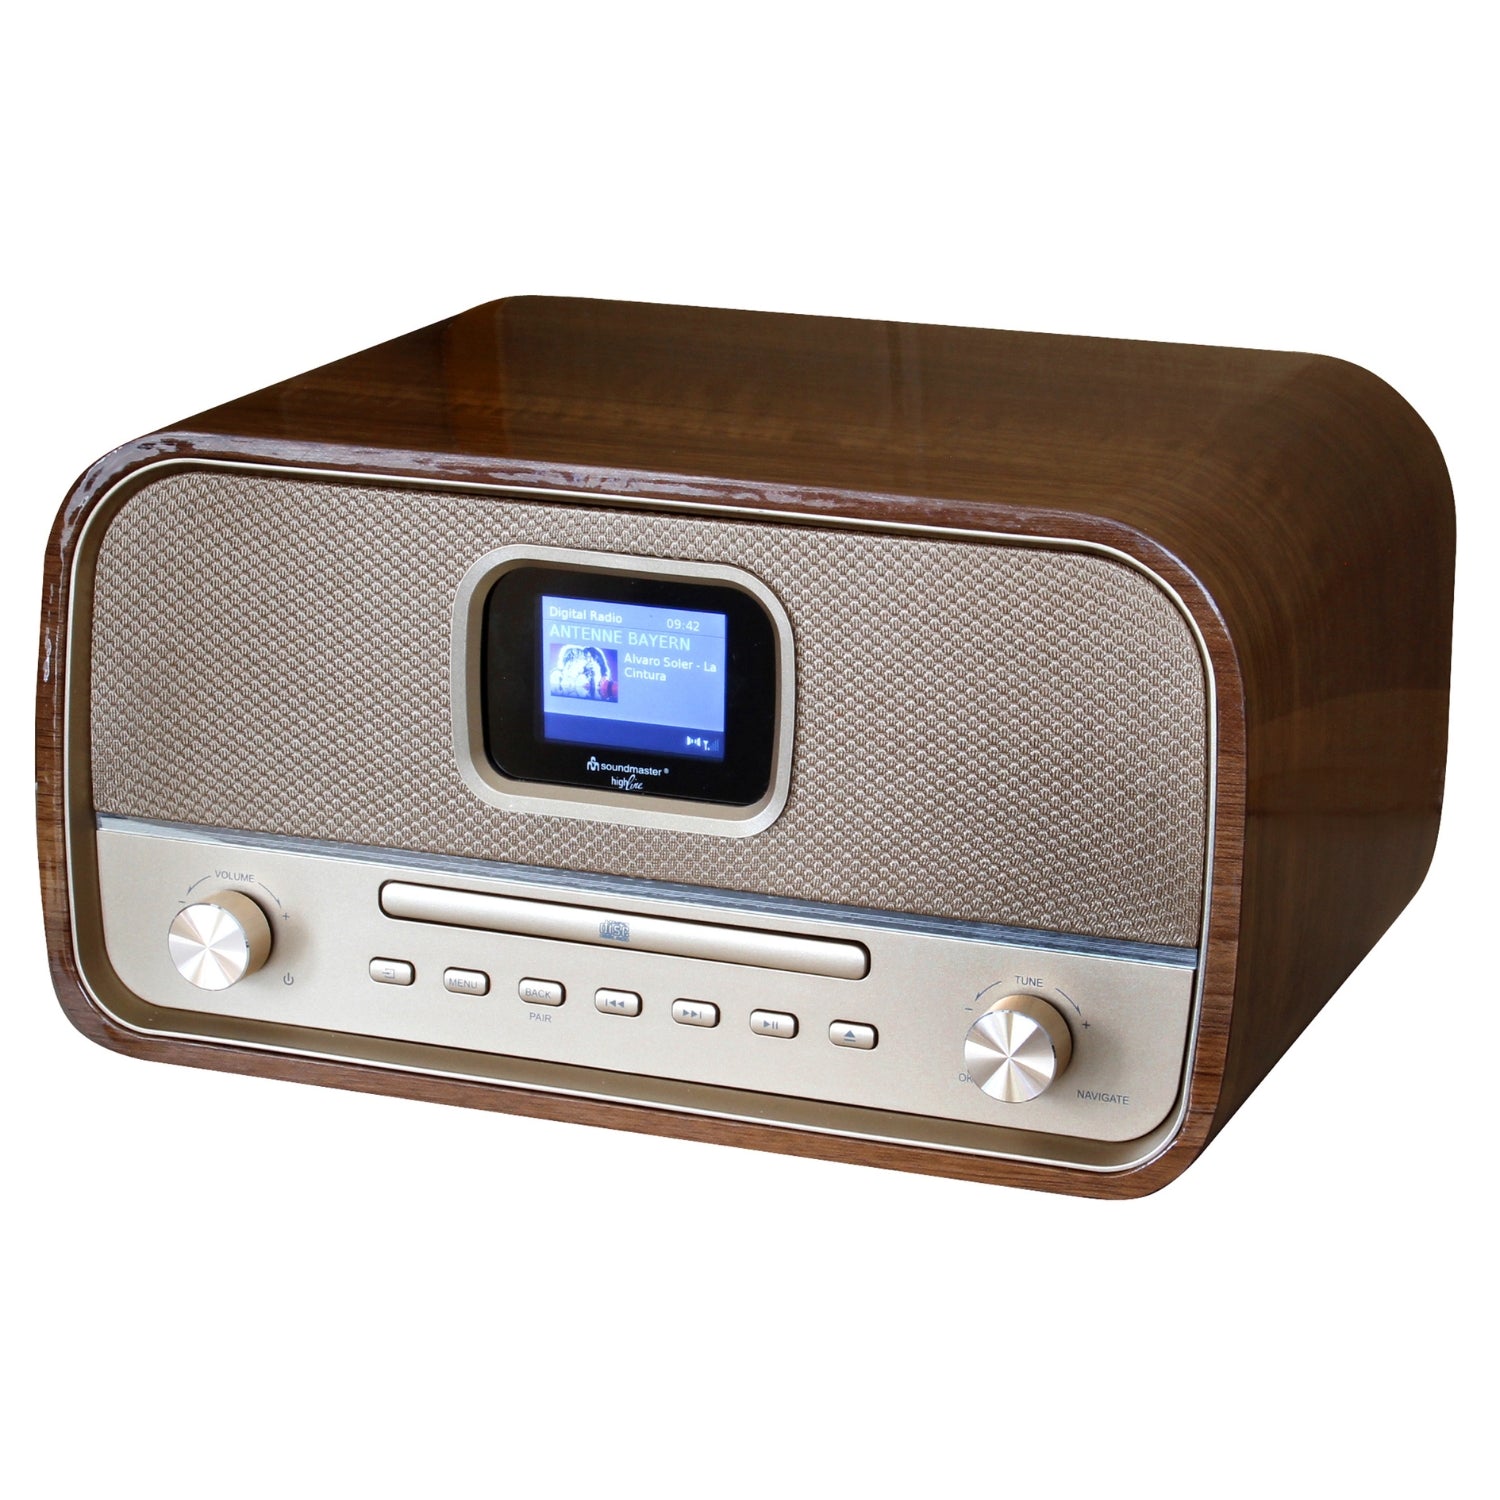 Soundmaster HighLine DAB970BR1 Retro Kompaktanlage Stereoanlage HiFi-Anlage DAB+ UKW CD-Player MP3 USB Bluetooth Streaming Farbdisplay